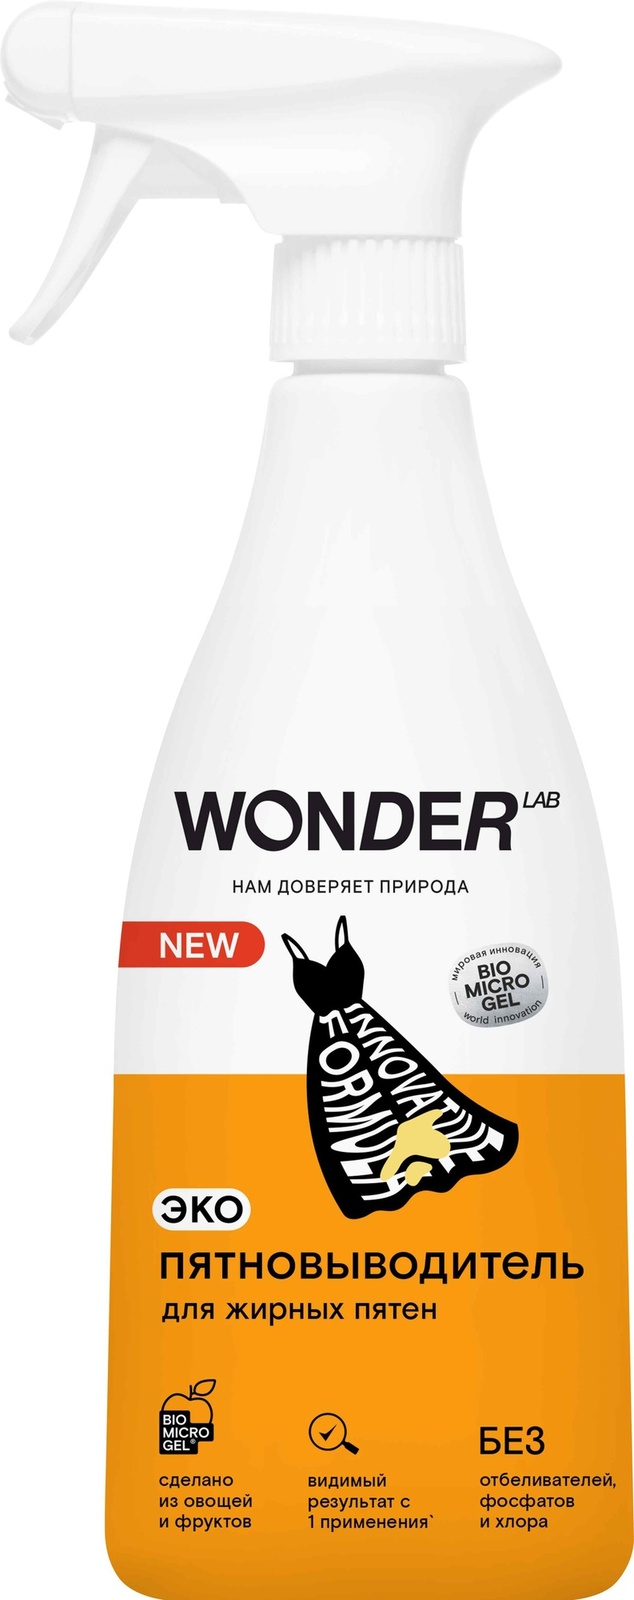 Wonder lab Wonder lab экопятновыводитель для жирных пятен (550 мл) цена и фото